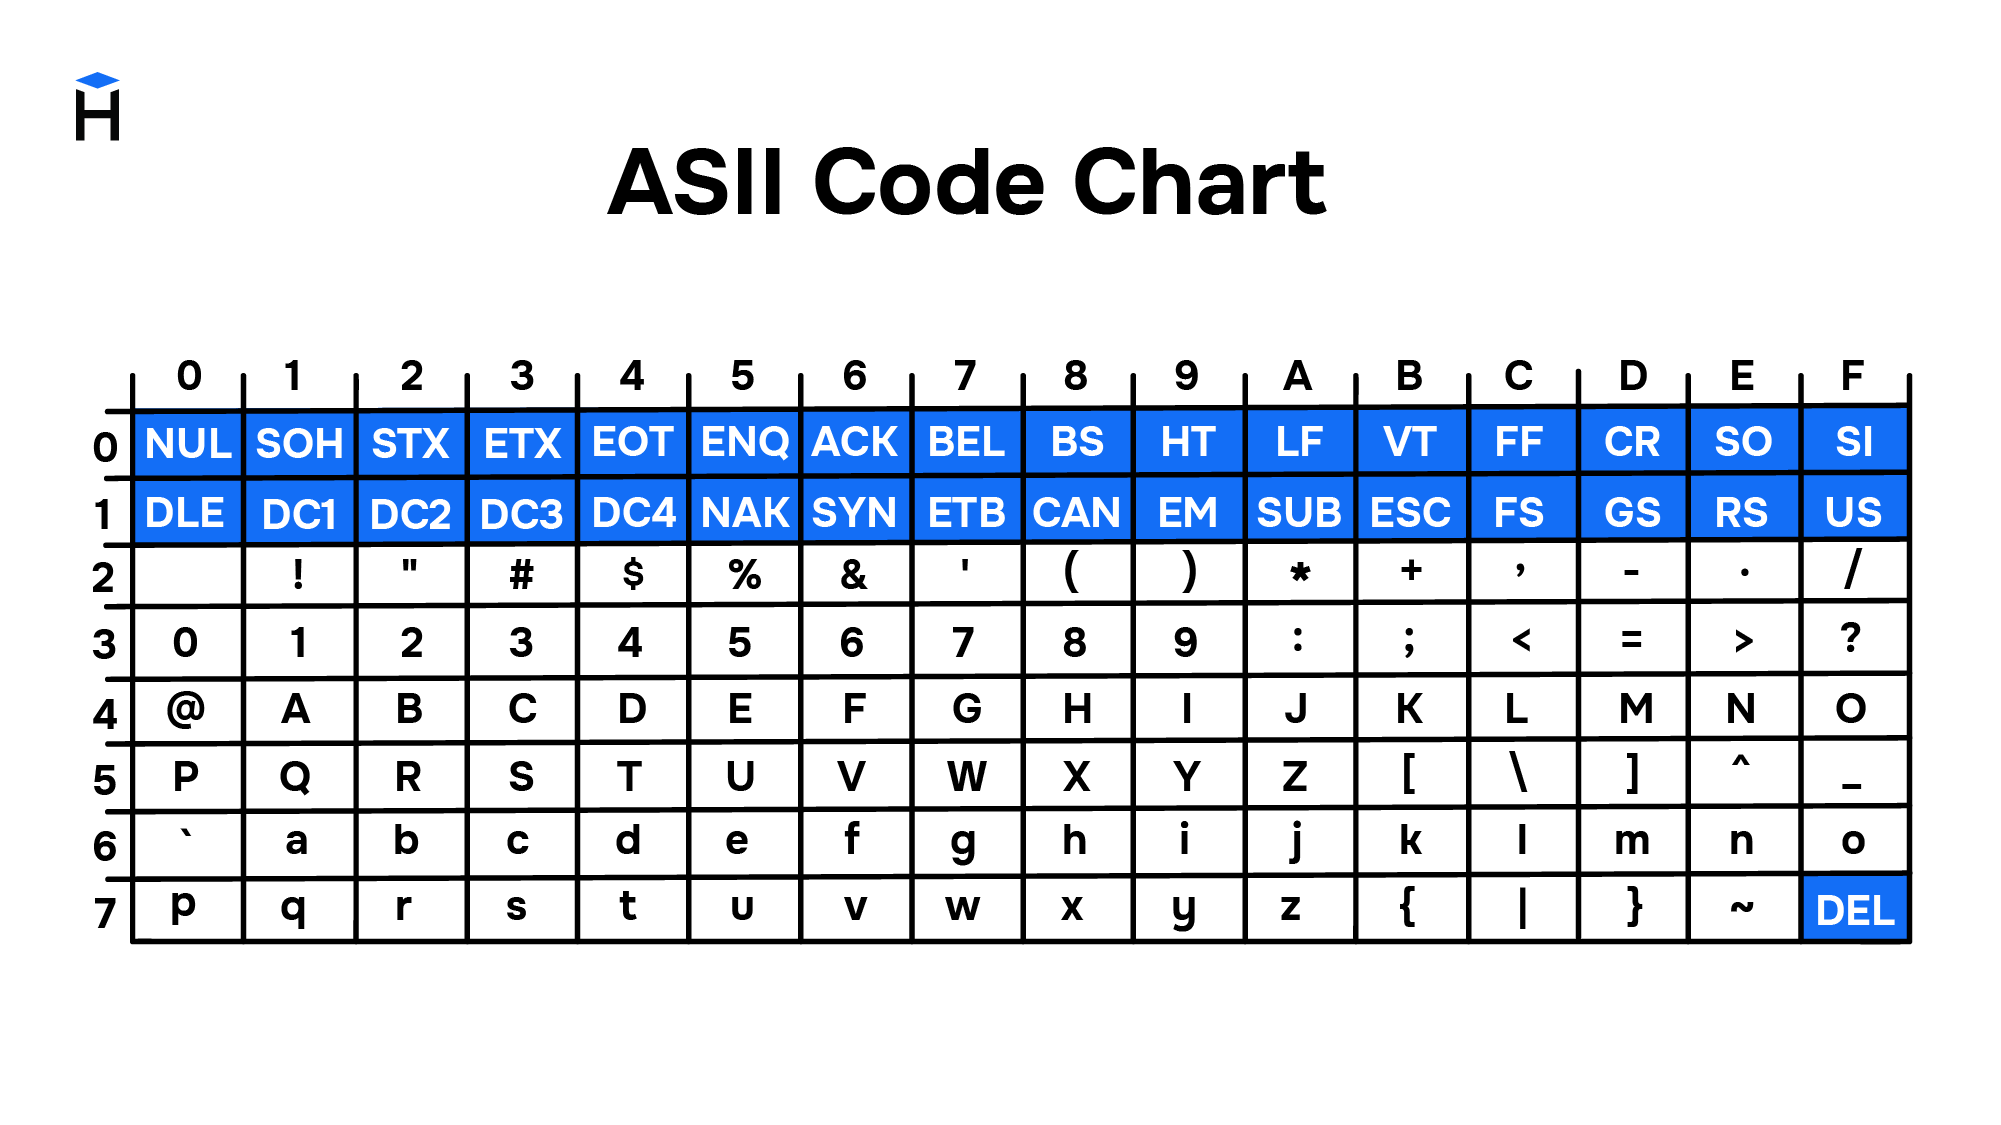 Image Code Chart